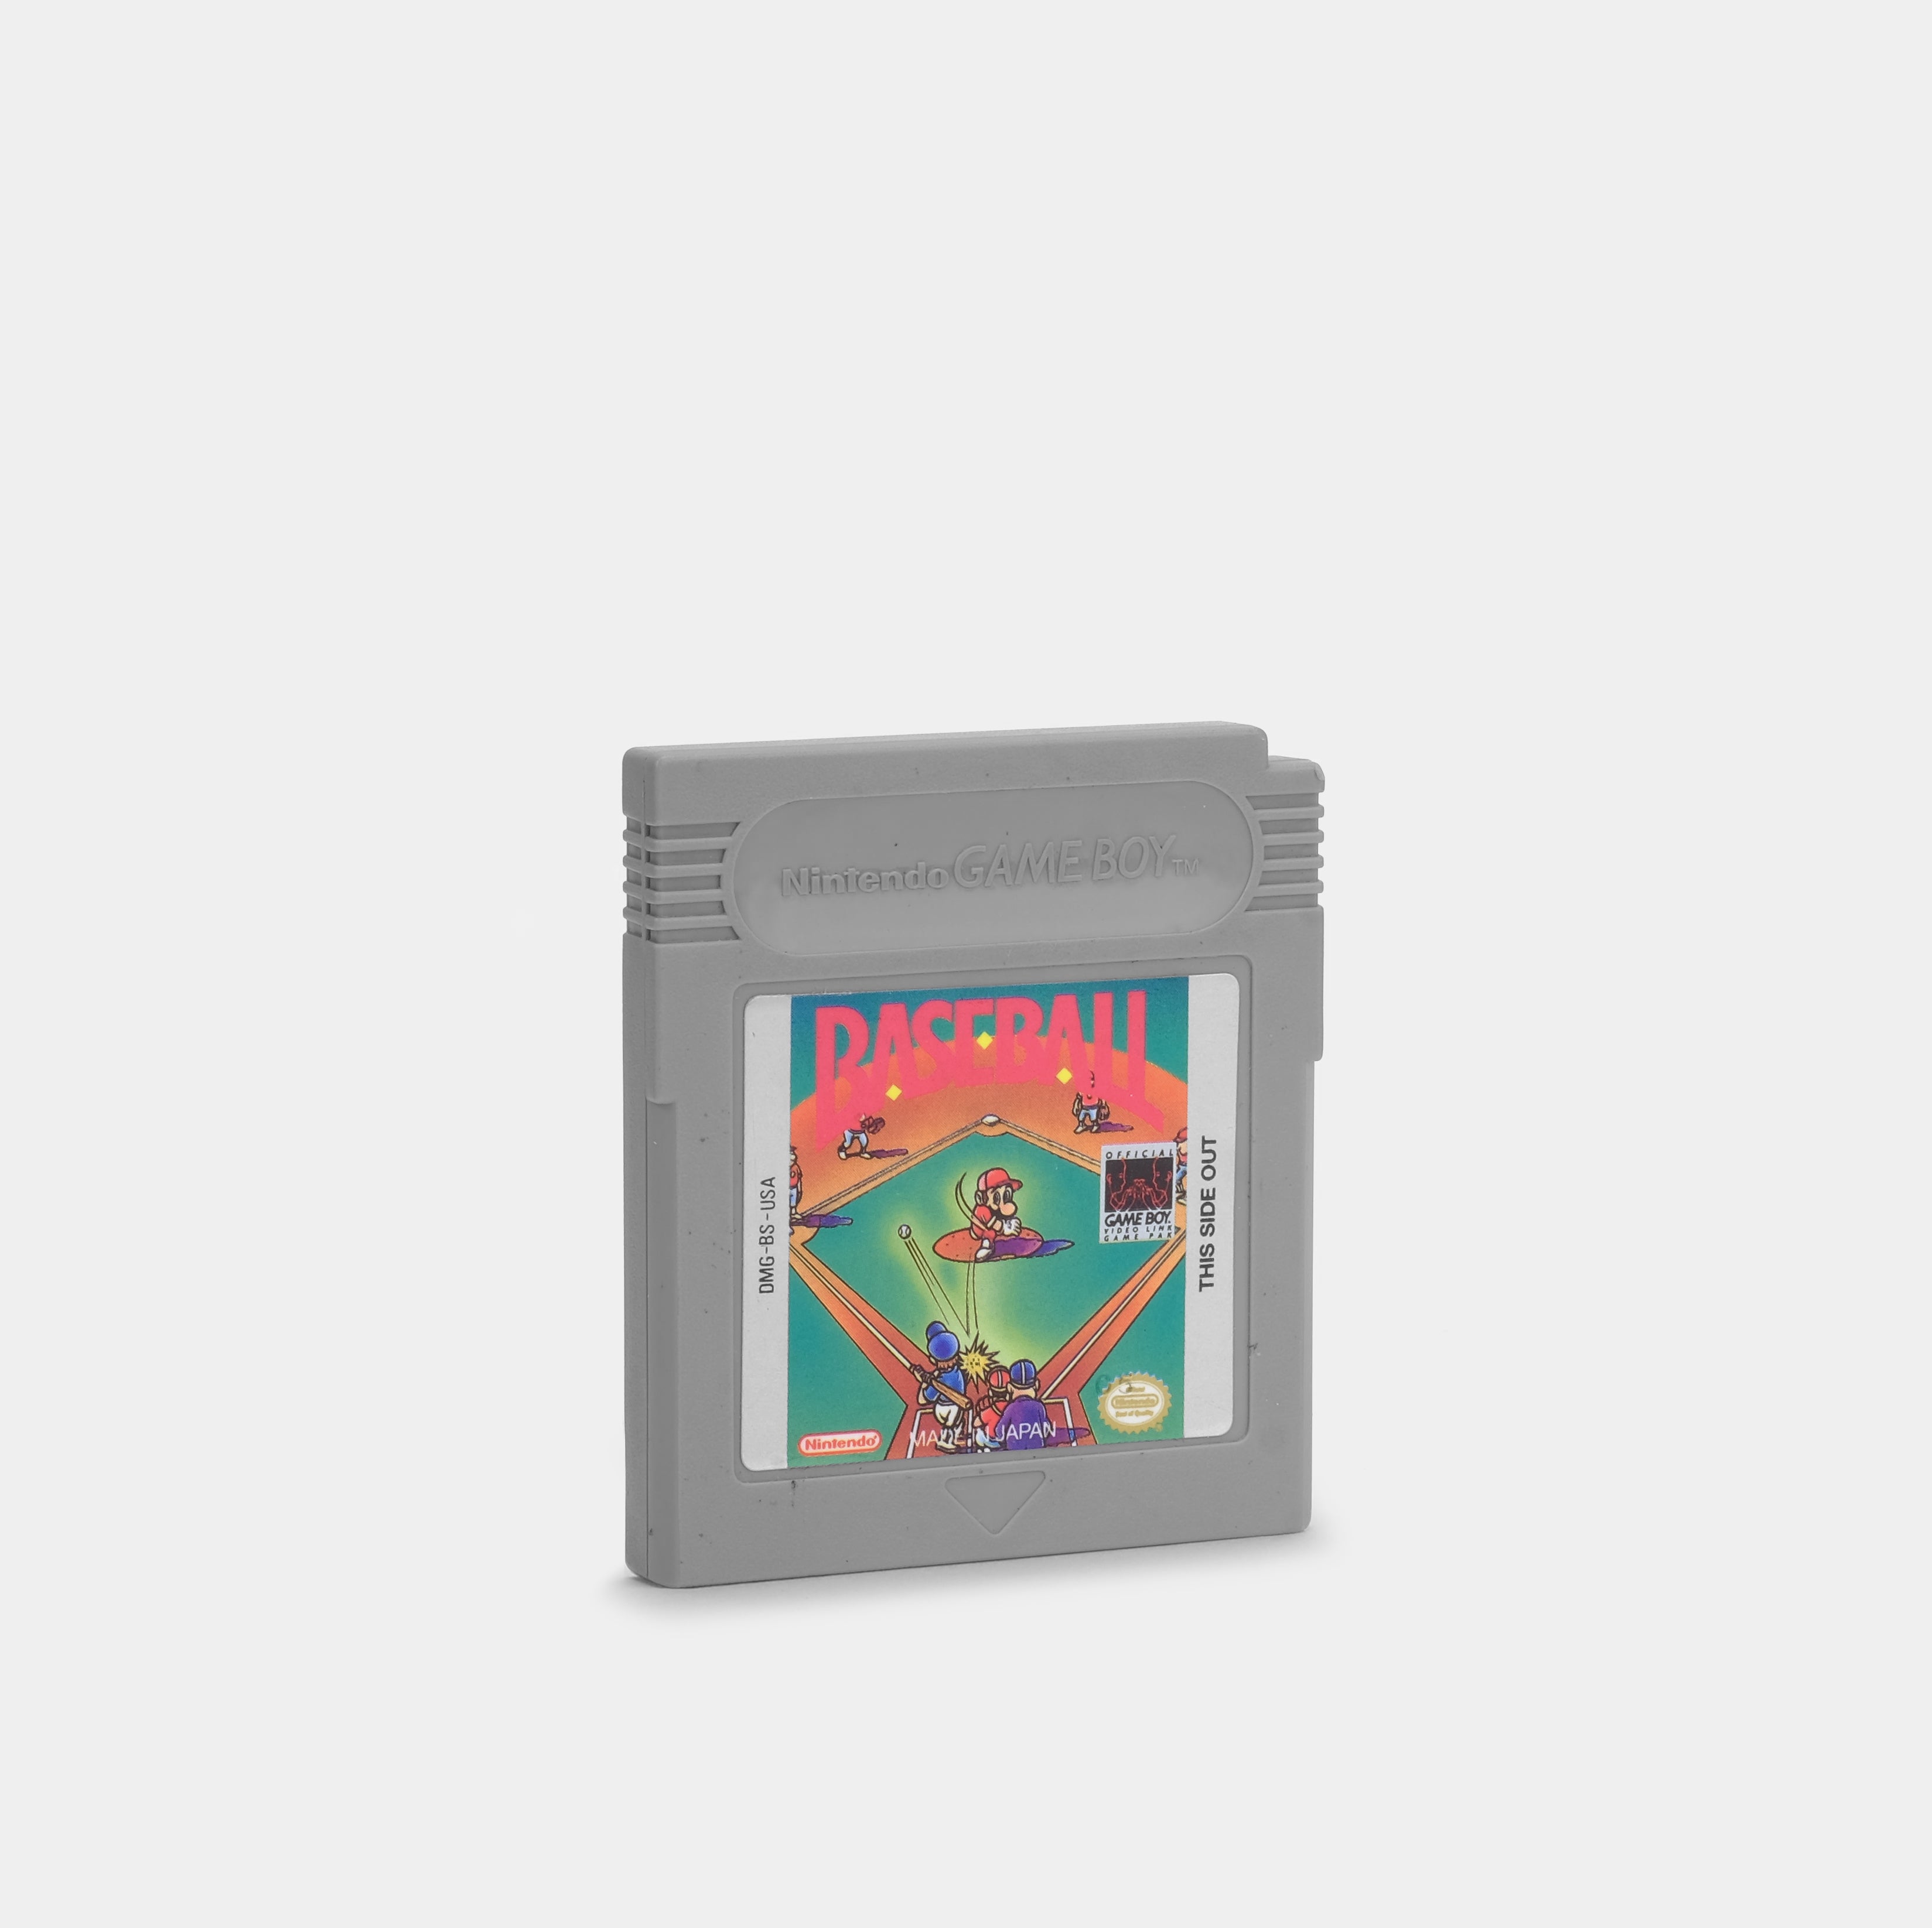 Baseball Game Boy Game